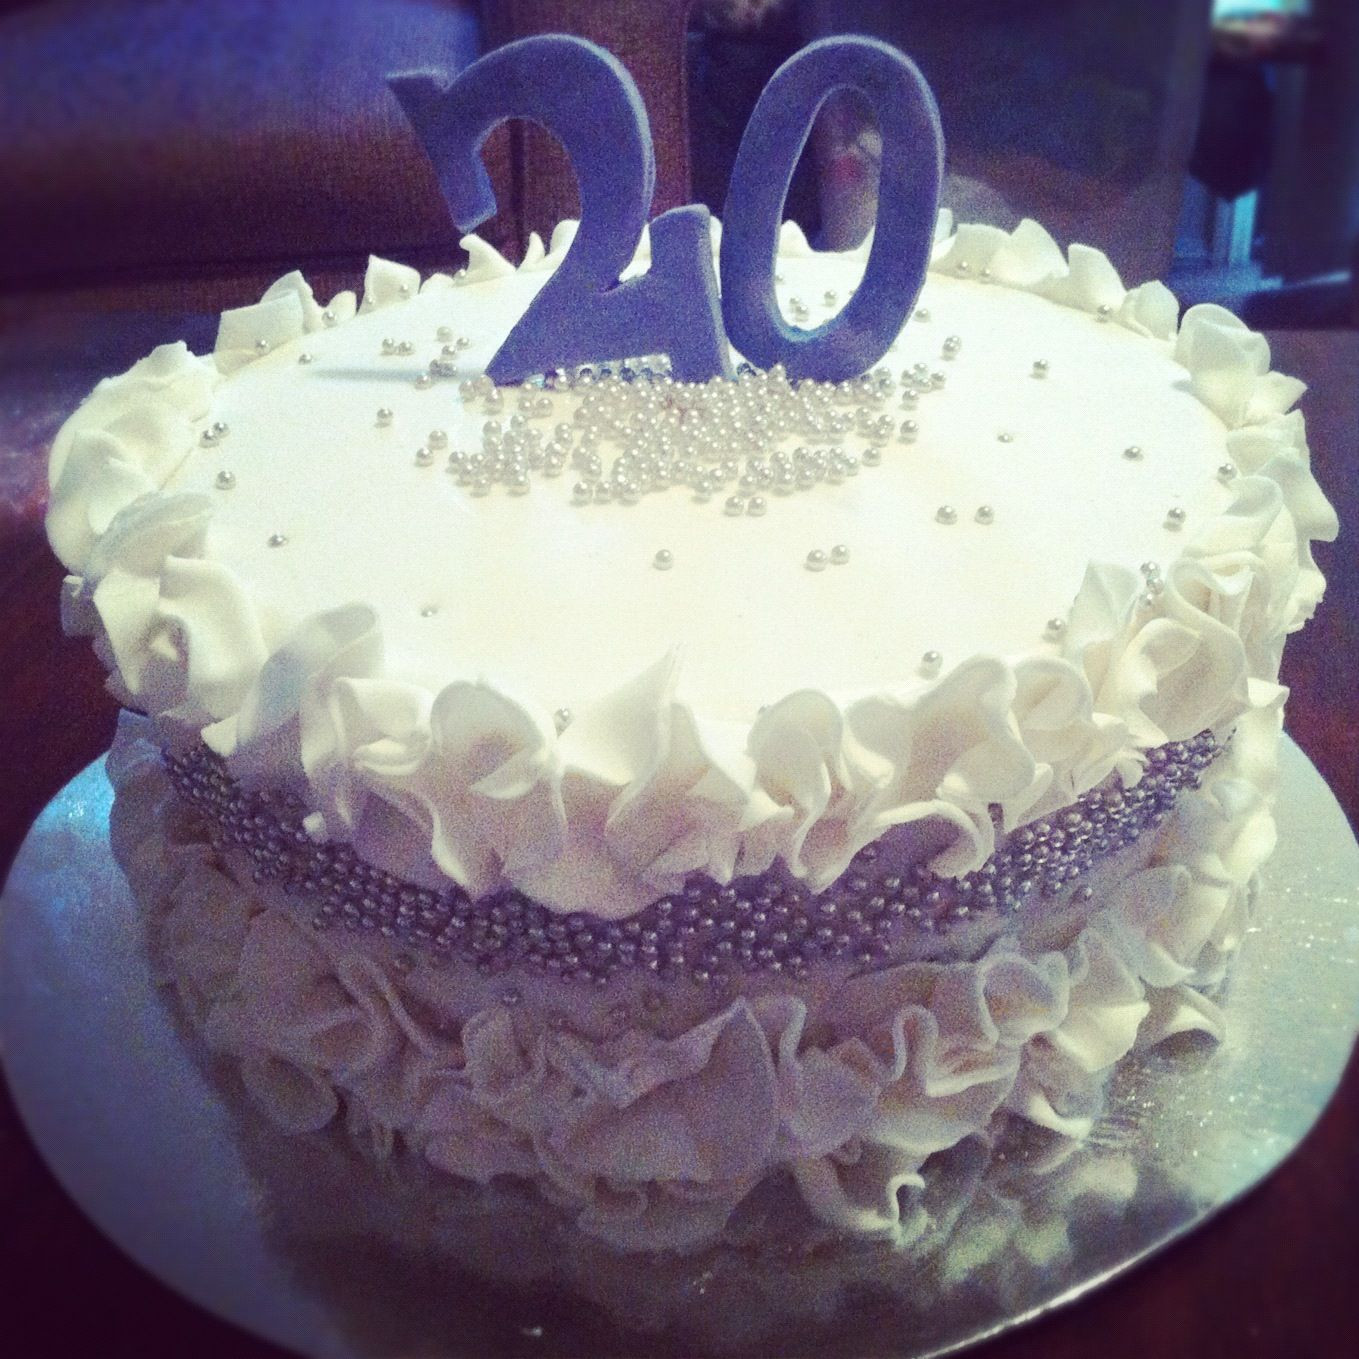 20th Birthday Cake Ideas
 The Best 20th Birthday Cake Ideas – Home Family Style